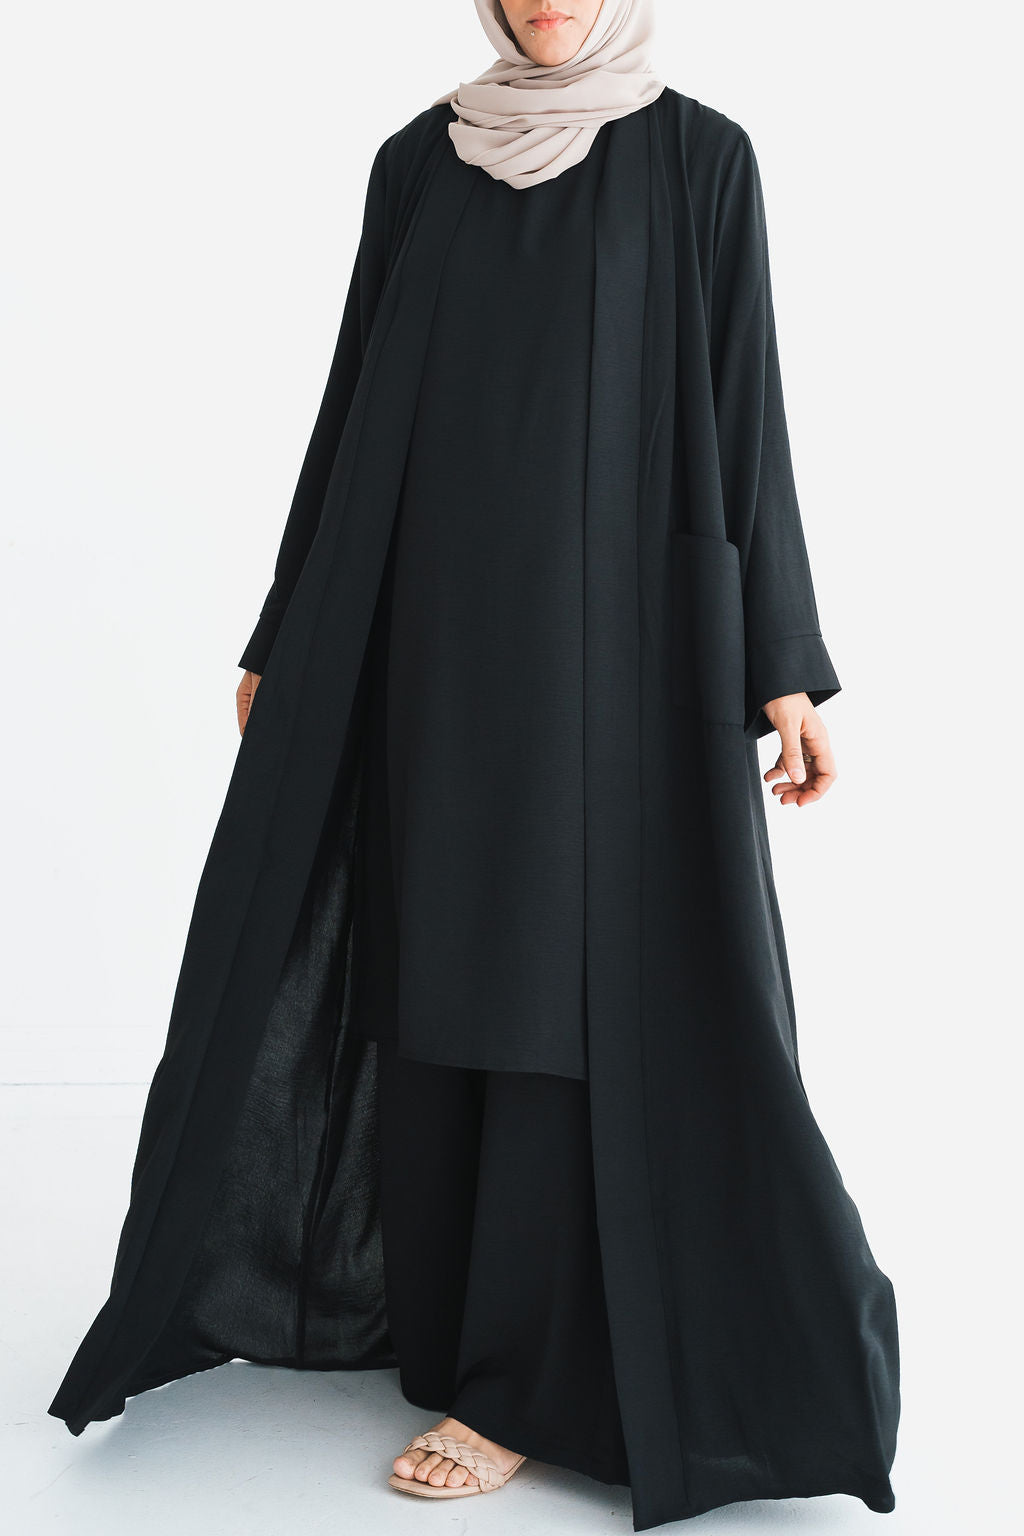 Black 3-Piece Kimono Abaya Set